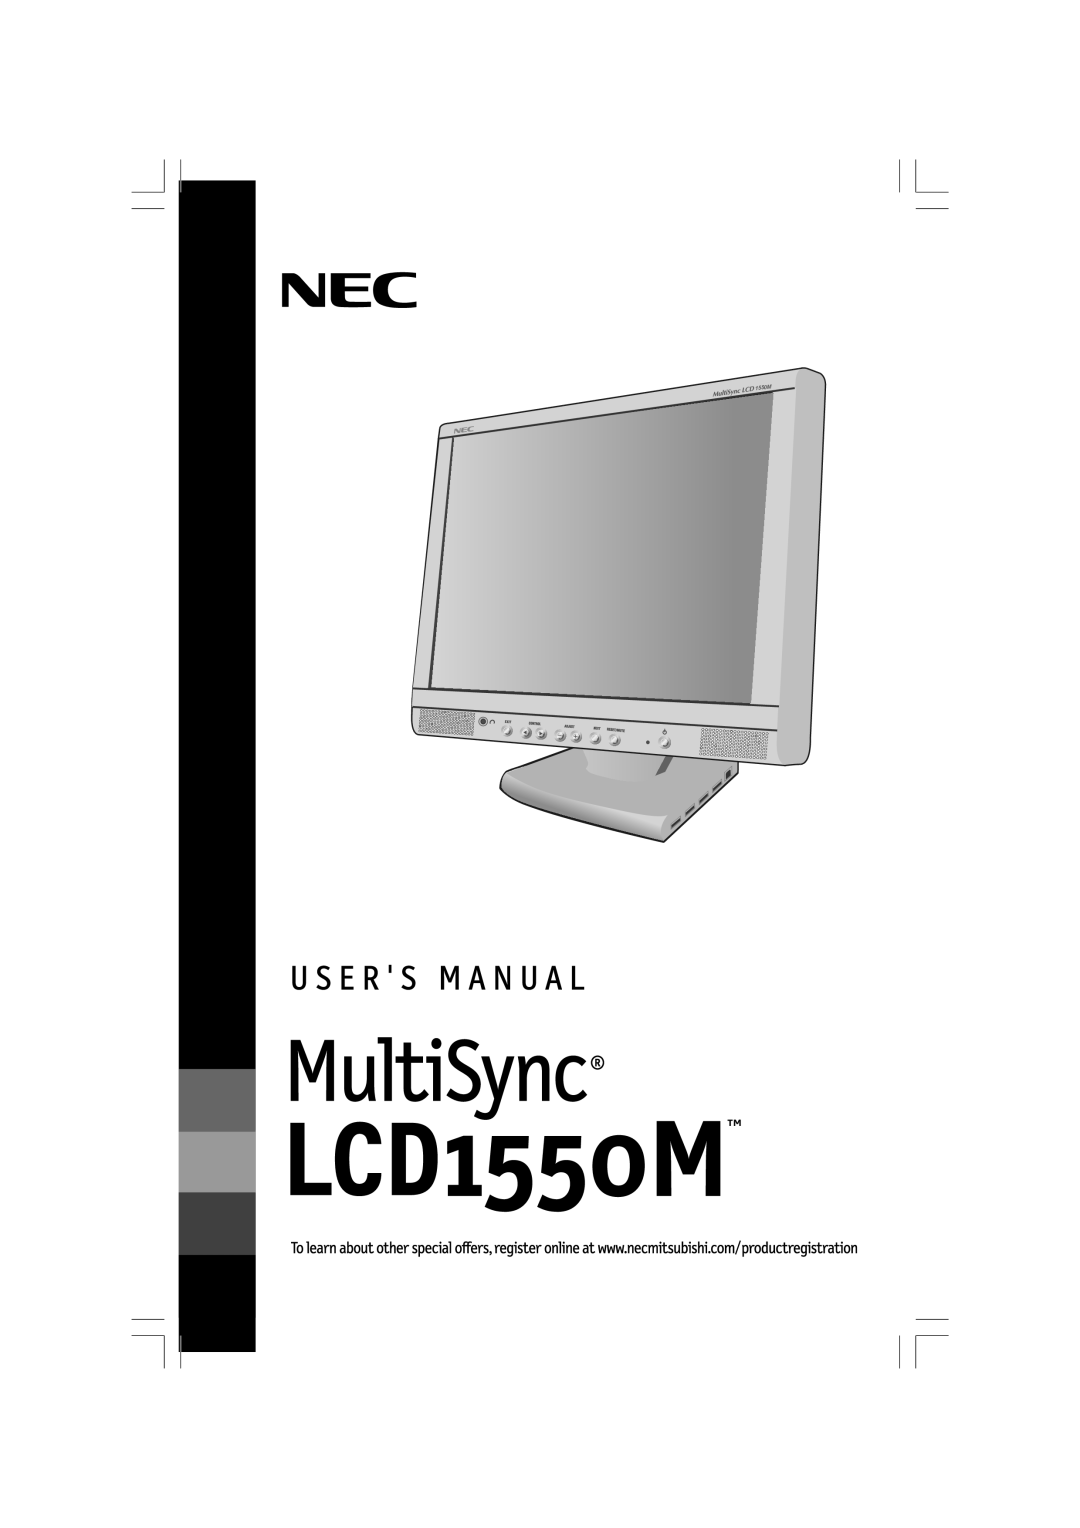 NEC LA-15R03-BK, LCD1550M manual 